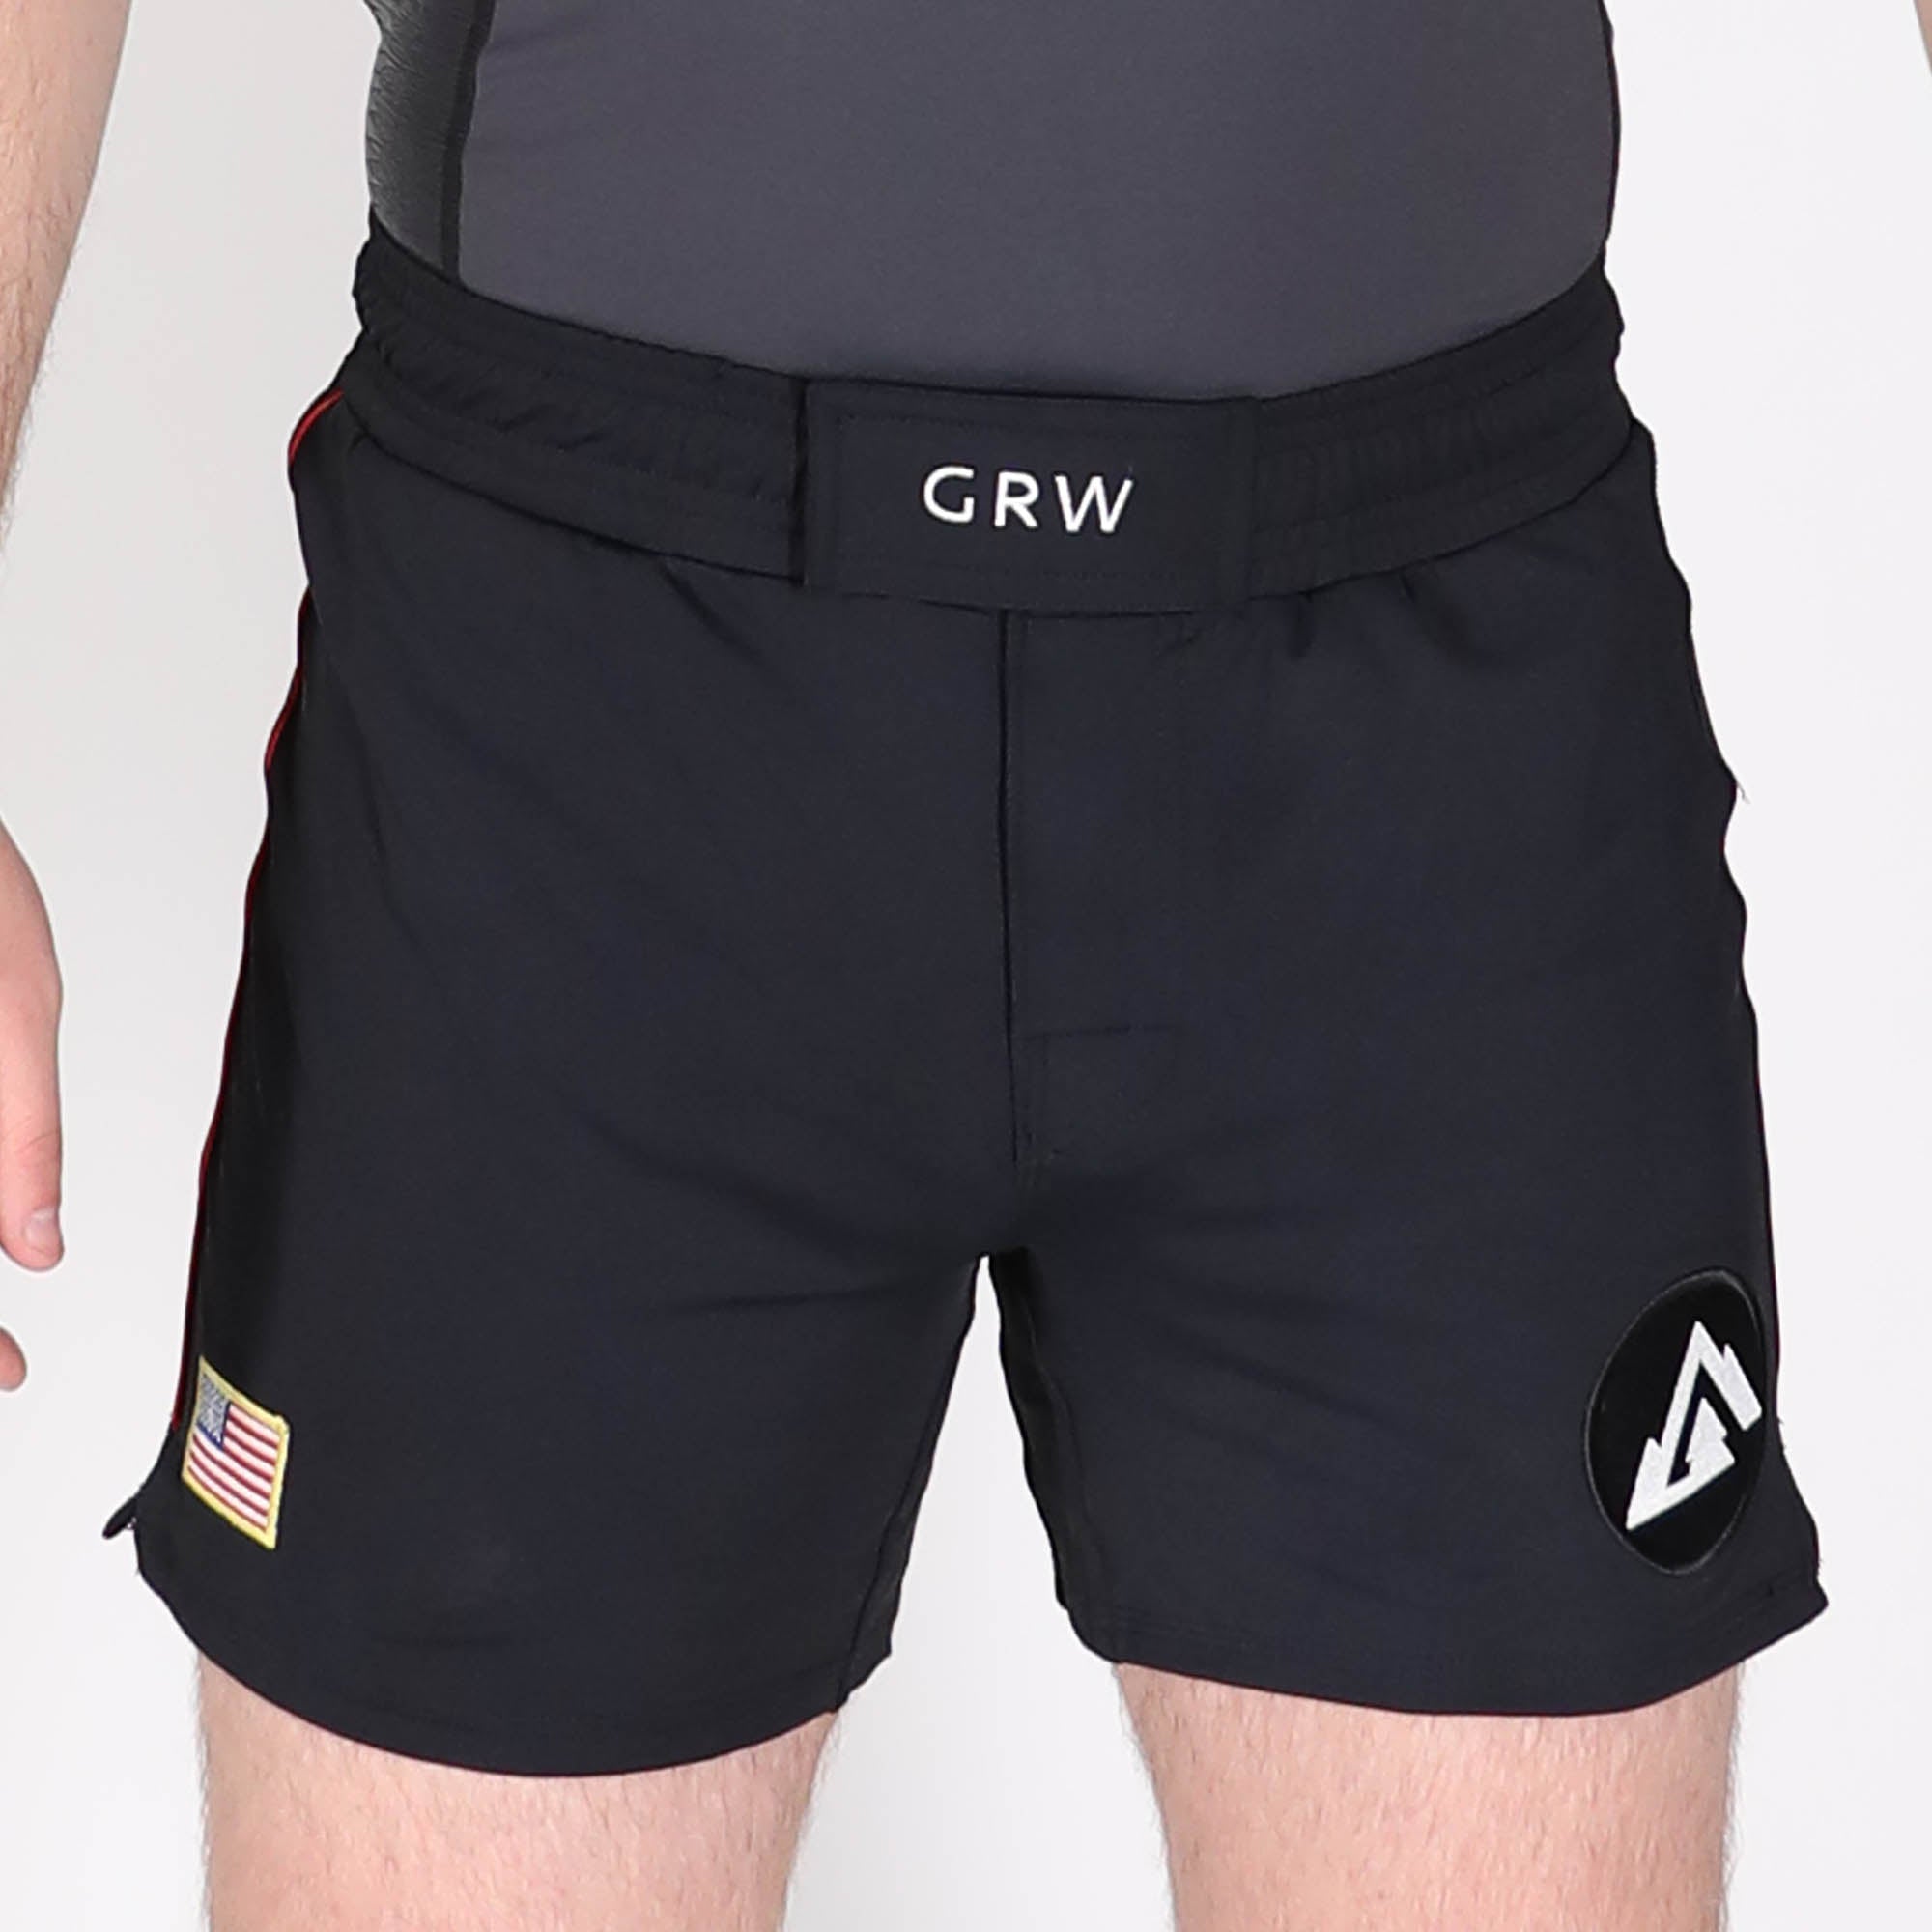 GRW versatile training shorts jiu jitsu mma BJJ Brazilian nogi made in USA